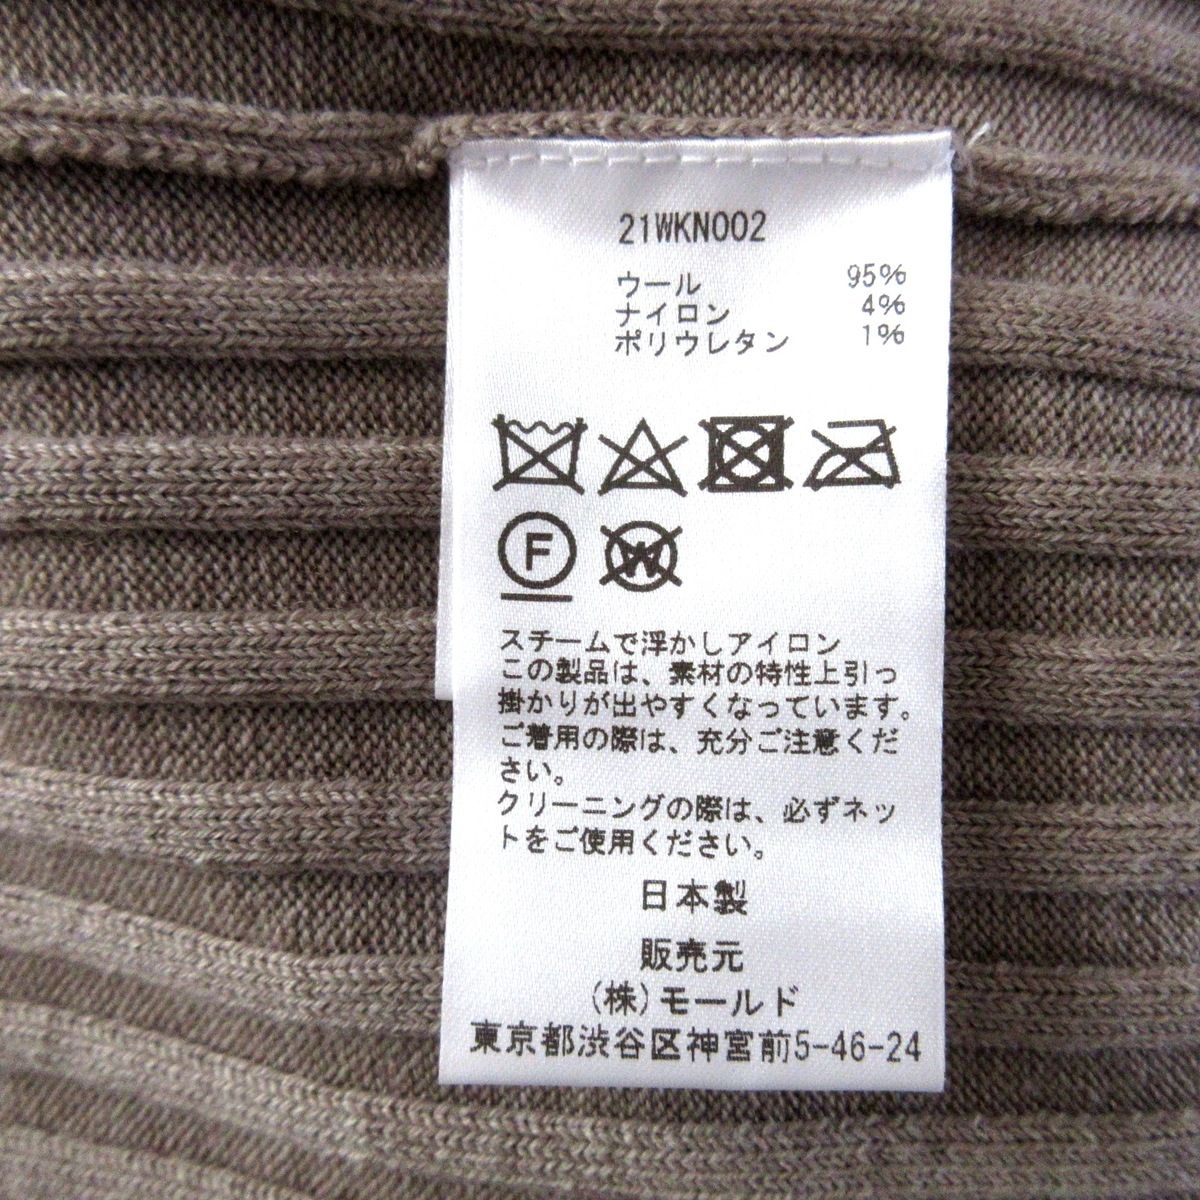 CINOH(チノ) 長袖セーター サイズ36 S レディース - ブラウン×イエロー